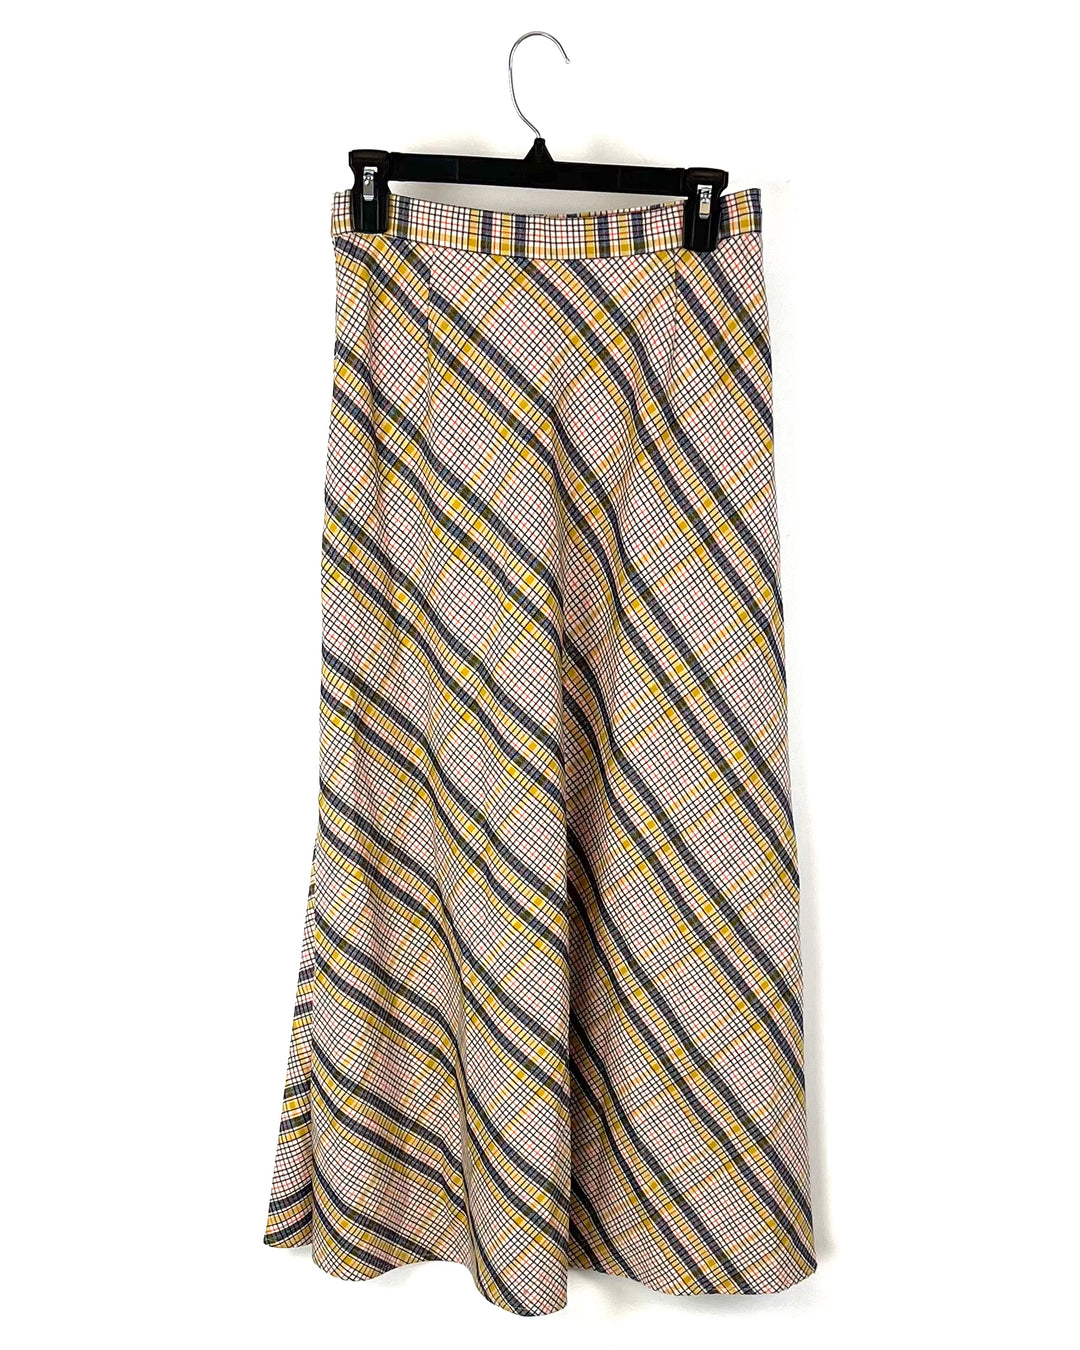 Plaid Maxi Skirt - Size 4-6